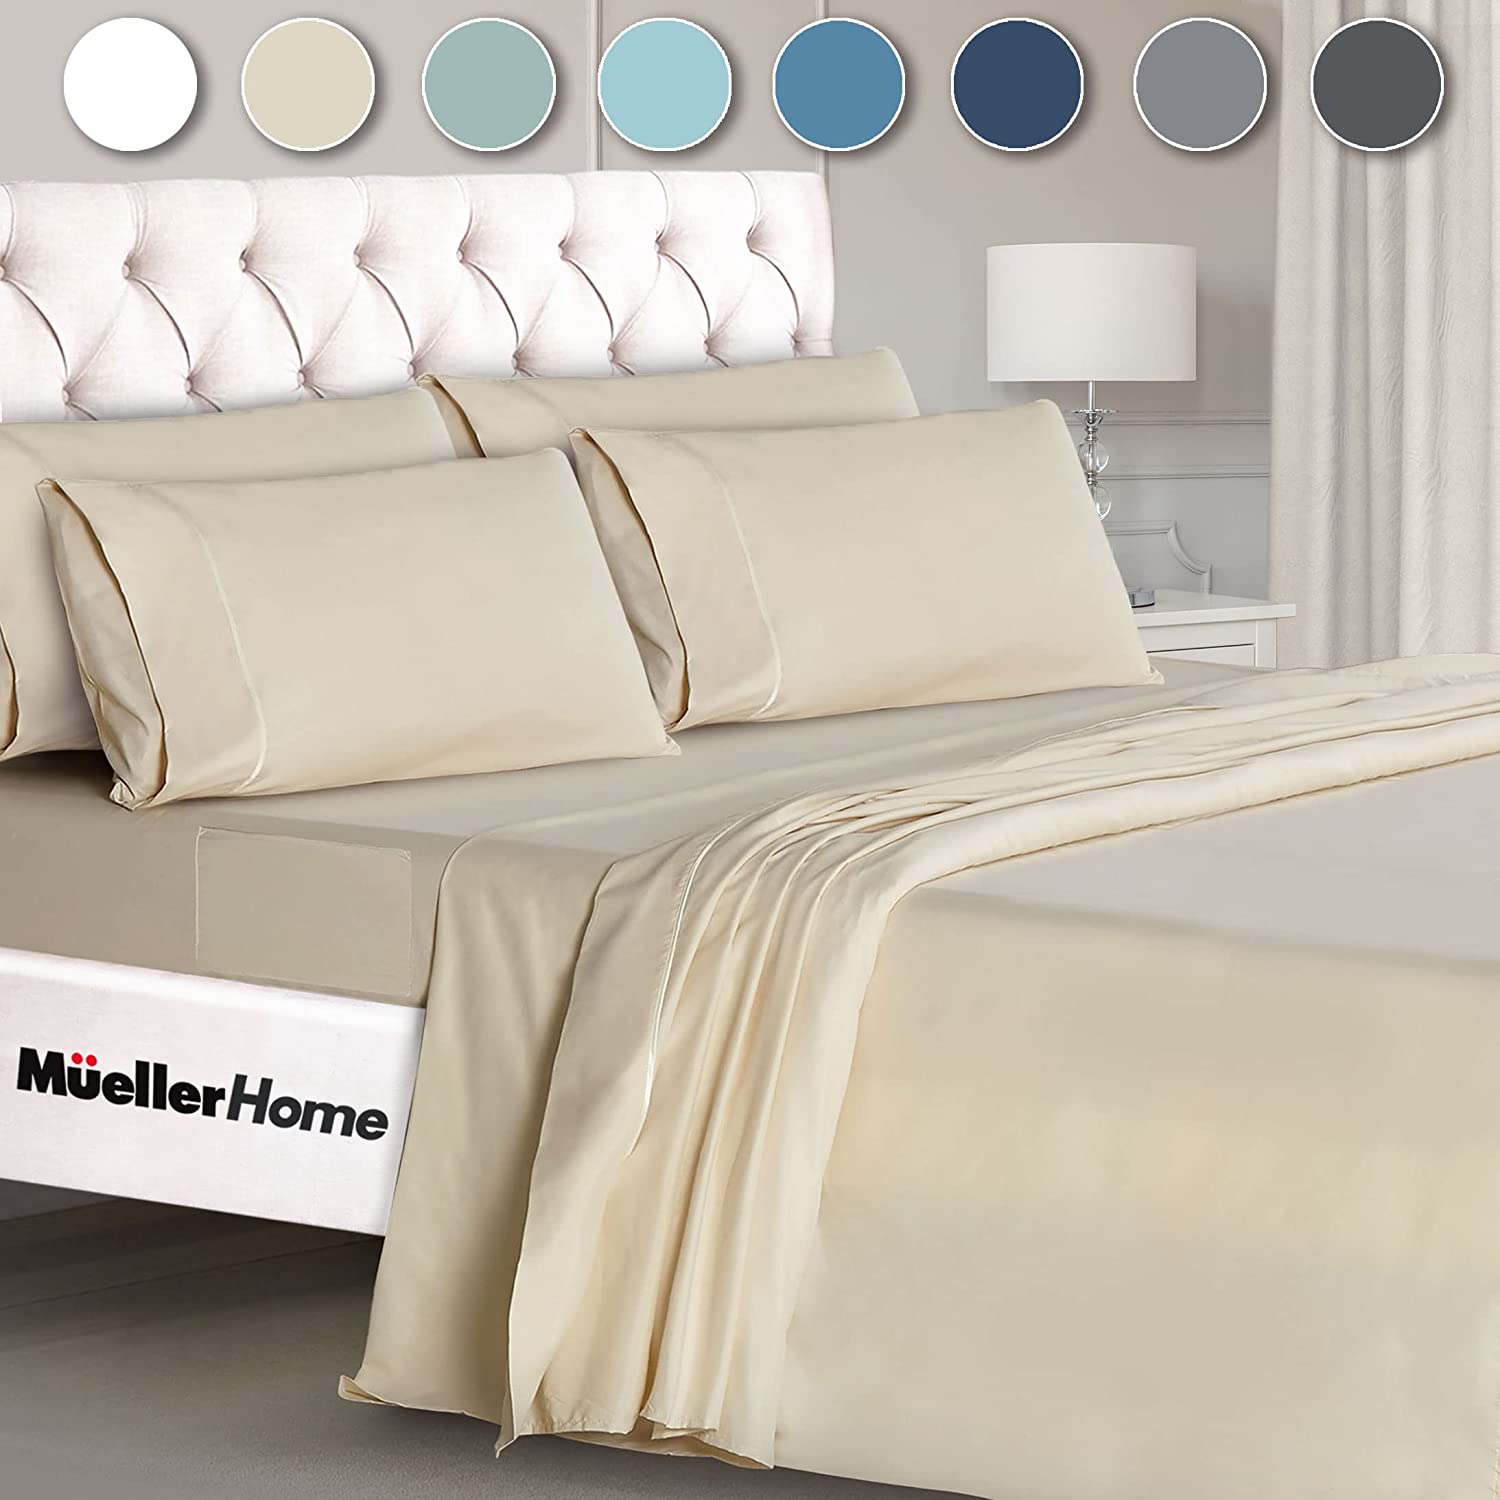 muelleraustria_6PC-Bed-Sheet-Cream-Queen1